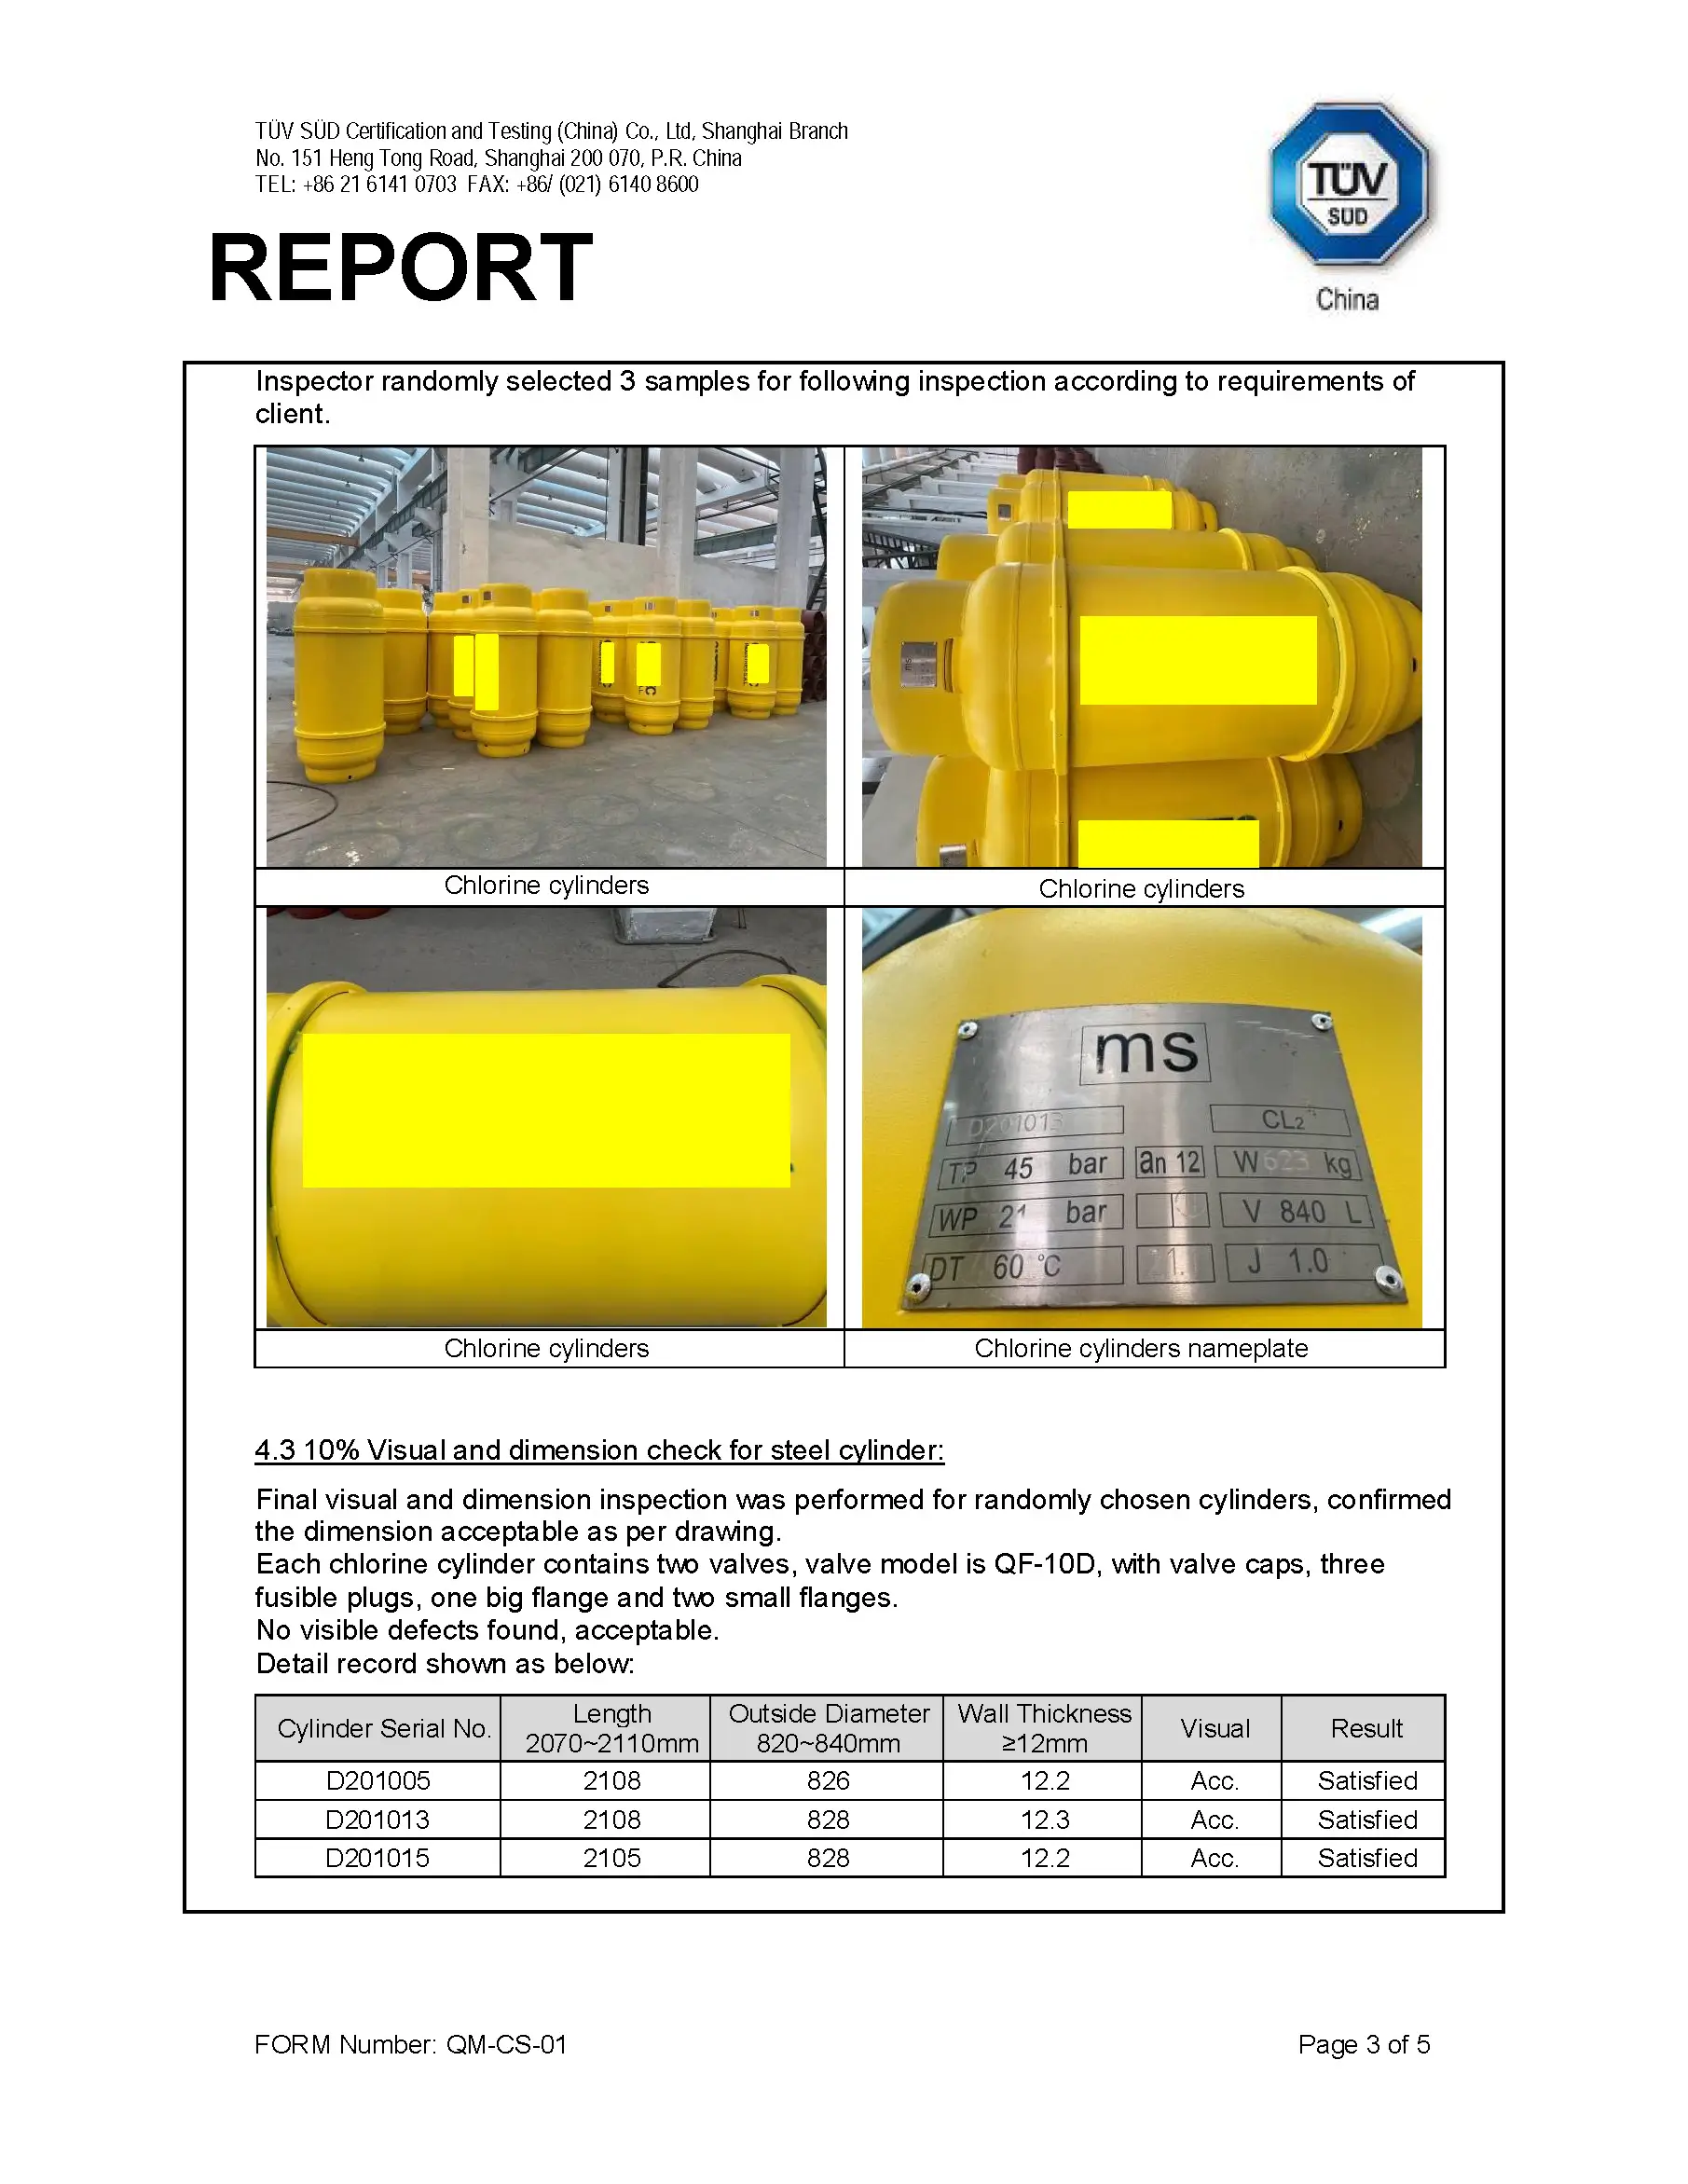 chlorine cylinder TUV test report 3